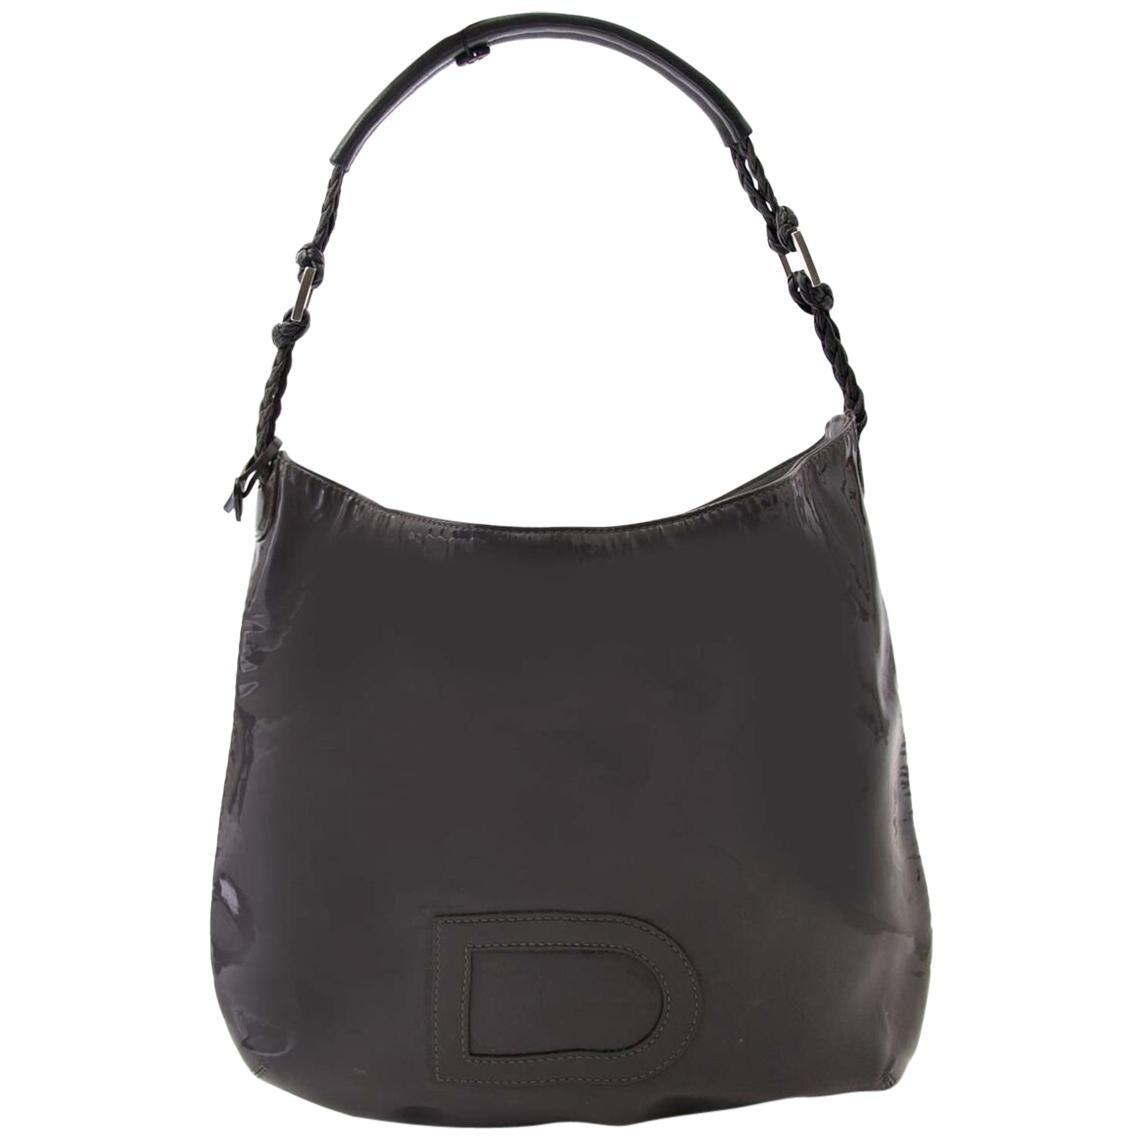 Delvaux Le Louise Grey Patent Leather Bag